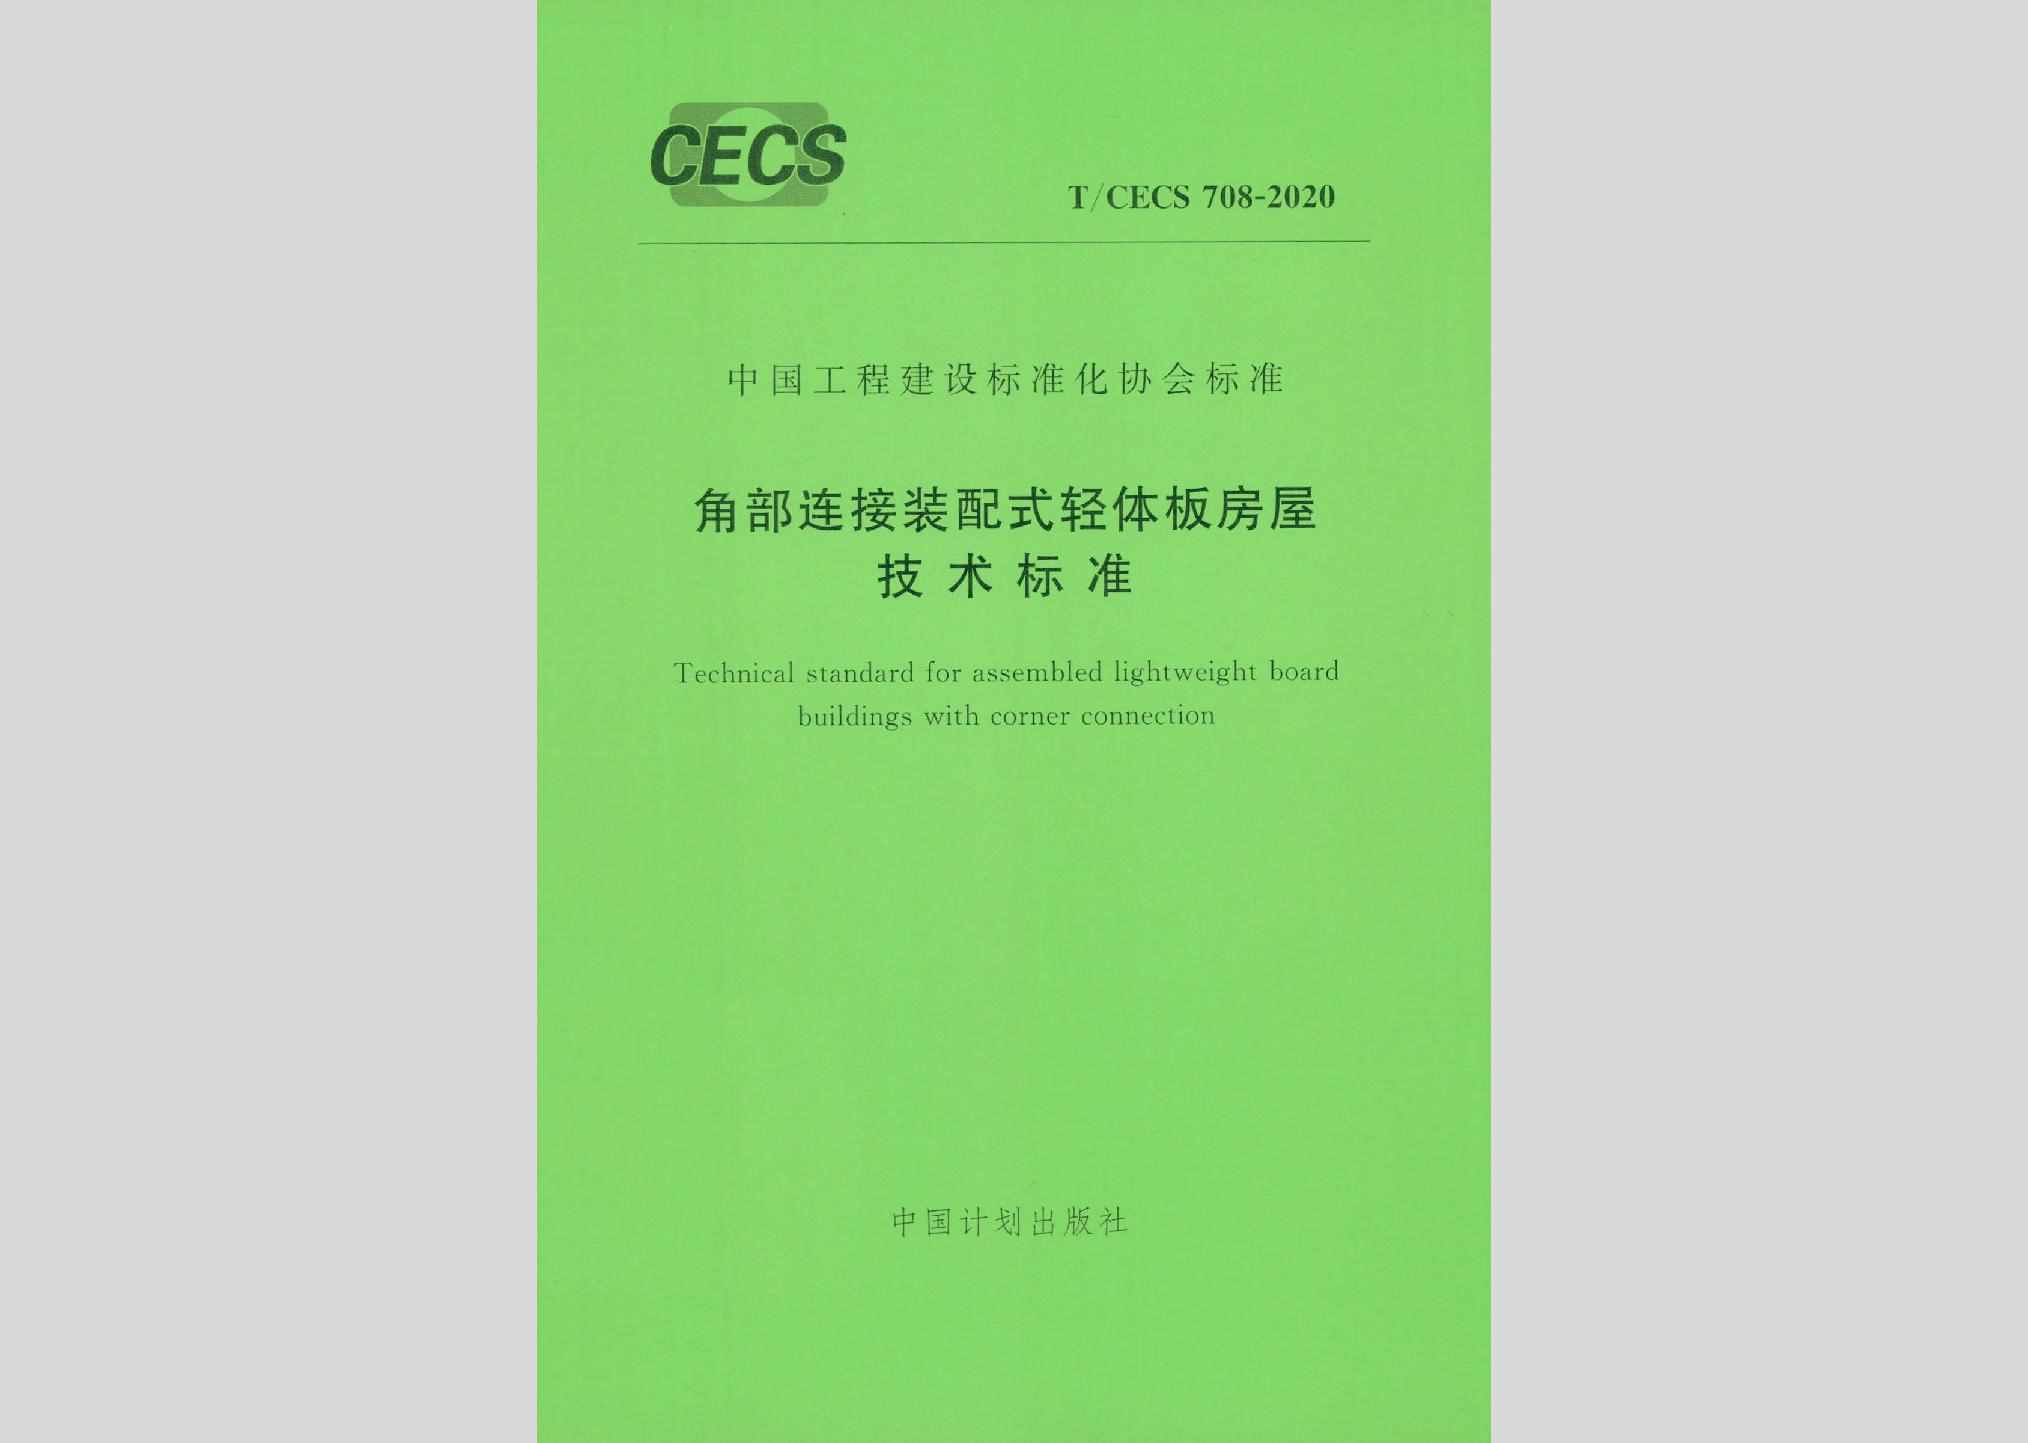 T/CECS708-2020：角部连接装配式轻体板房屋技术标准